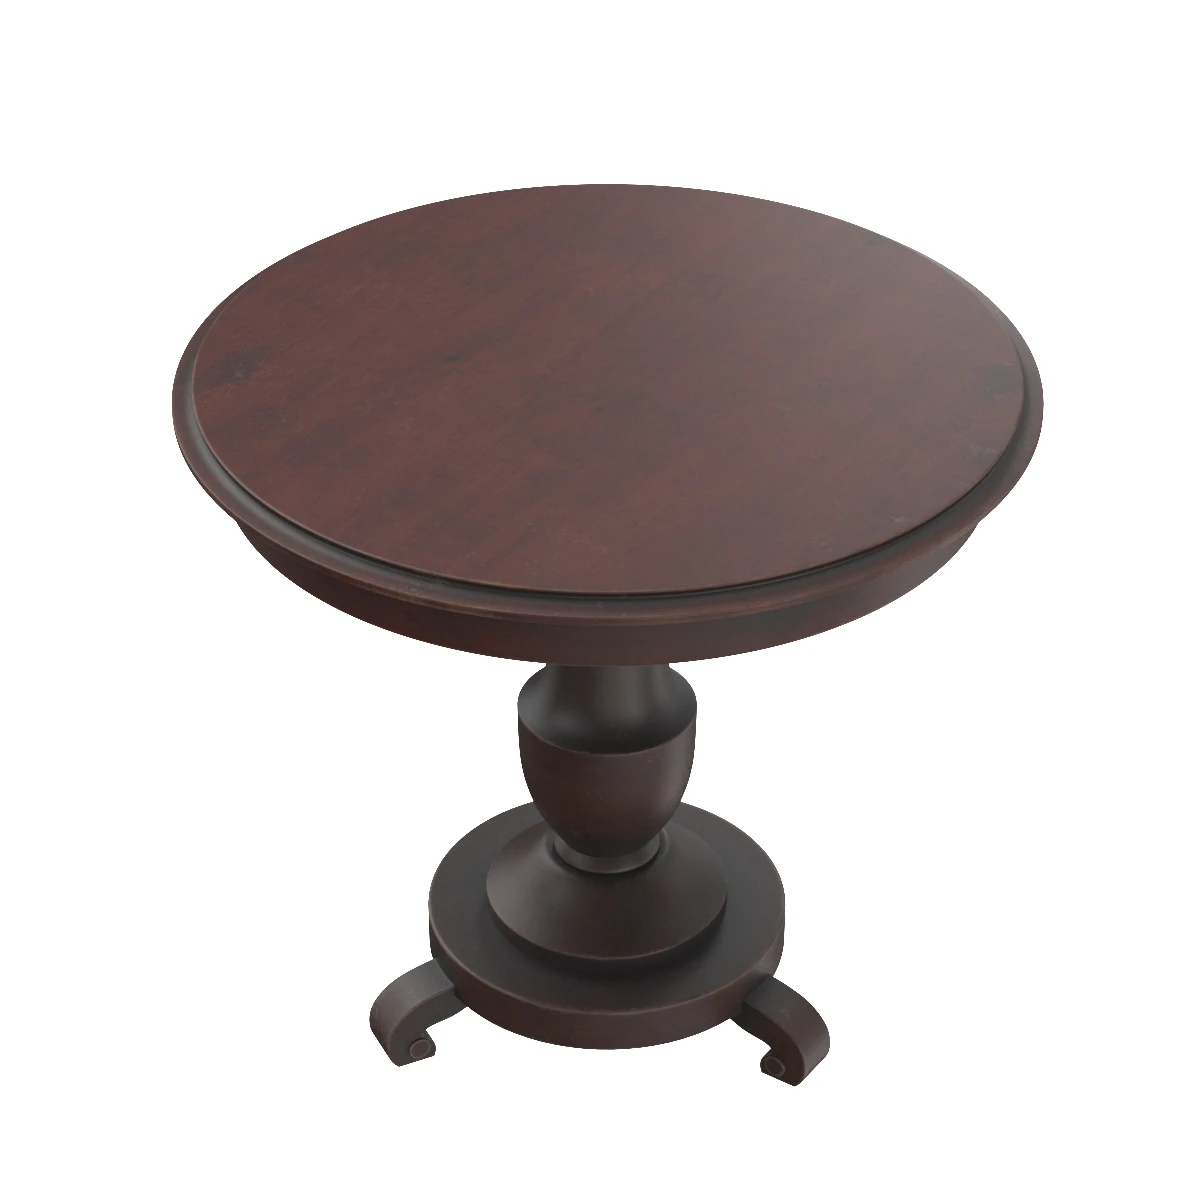 Antique Italian Walnut Wood Round Table 3D Model_06